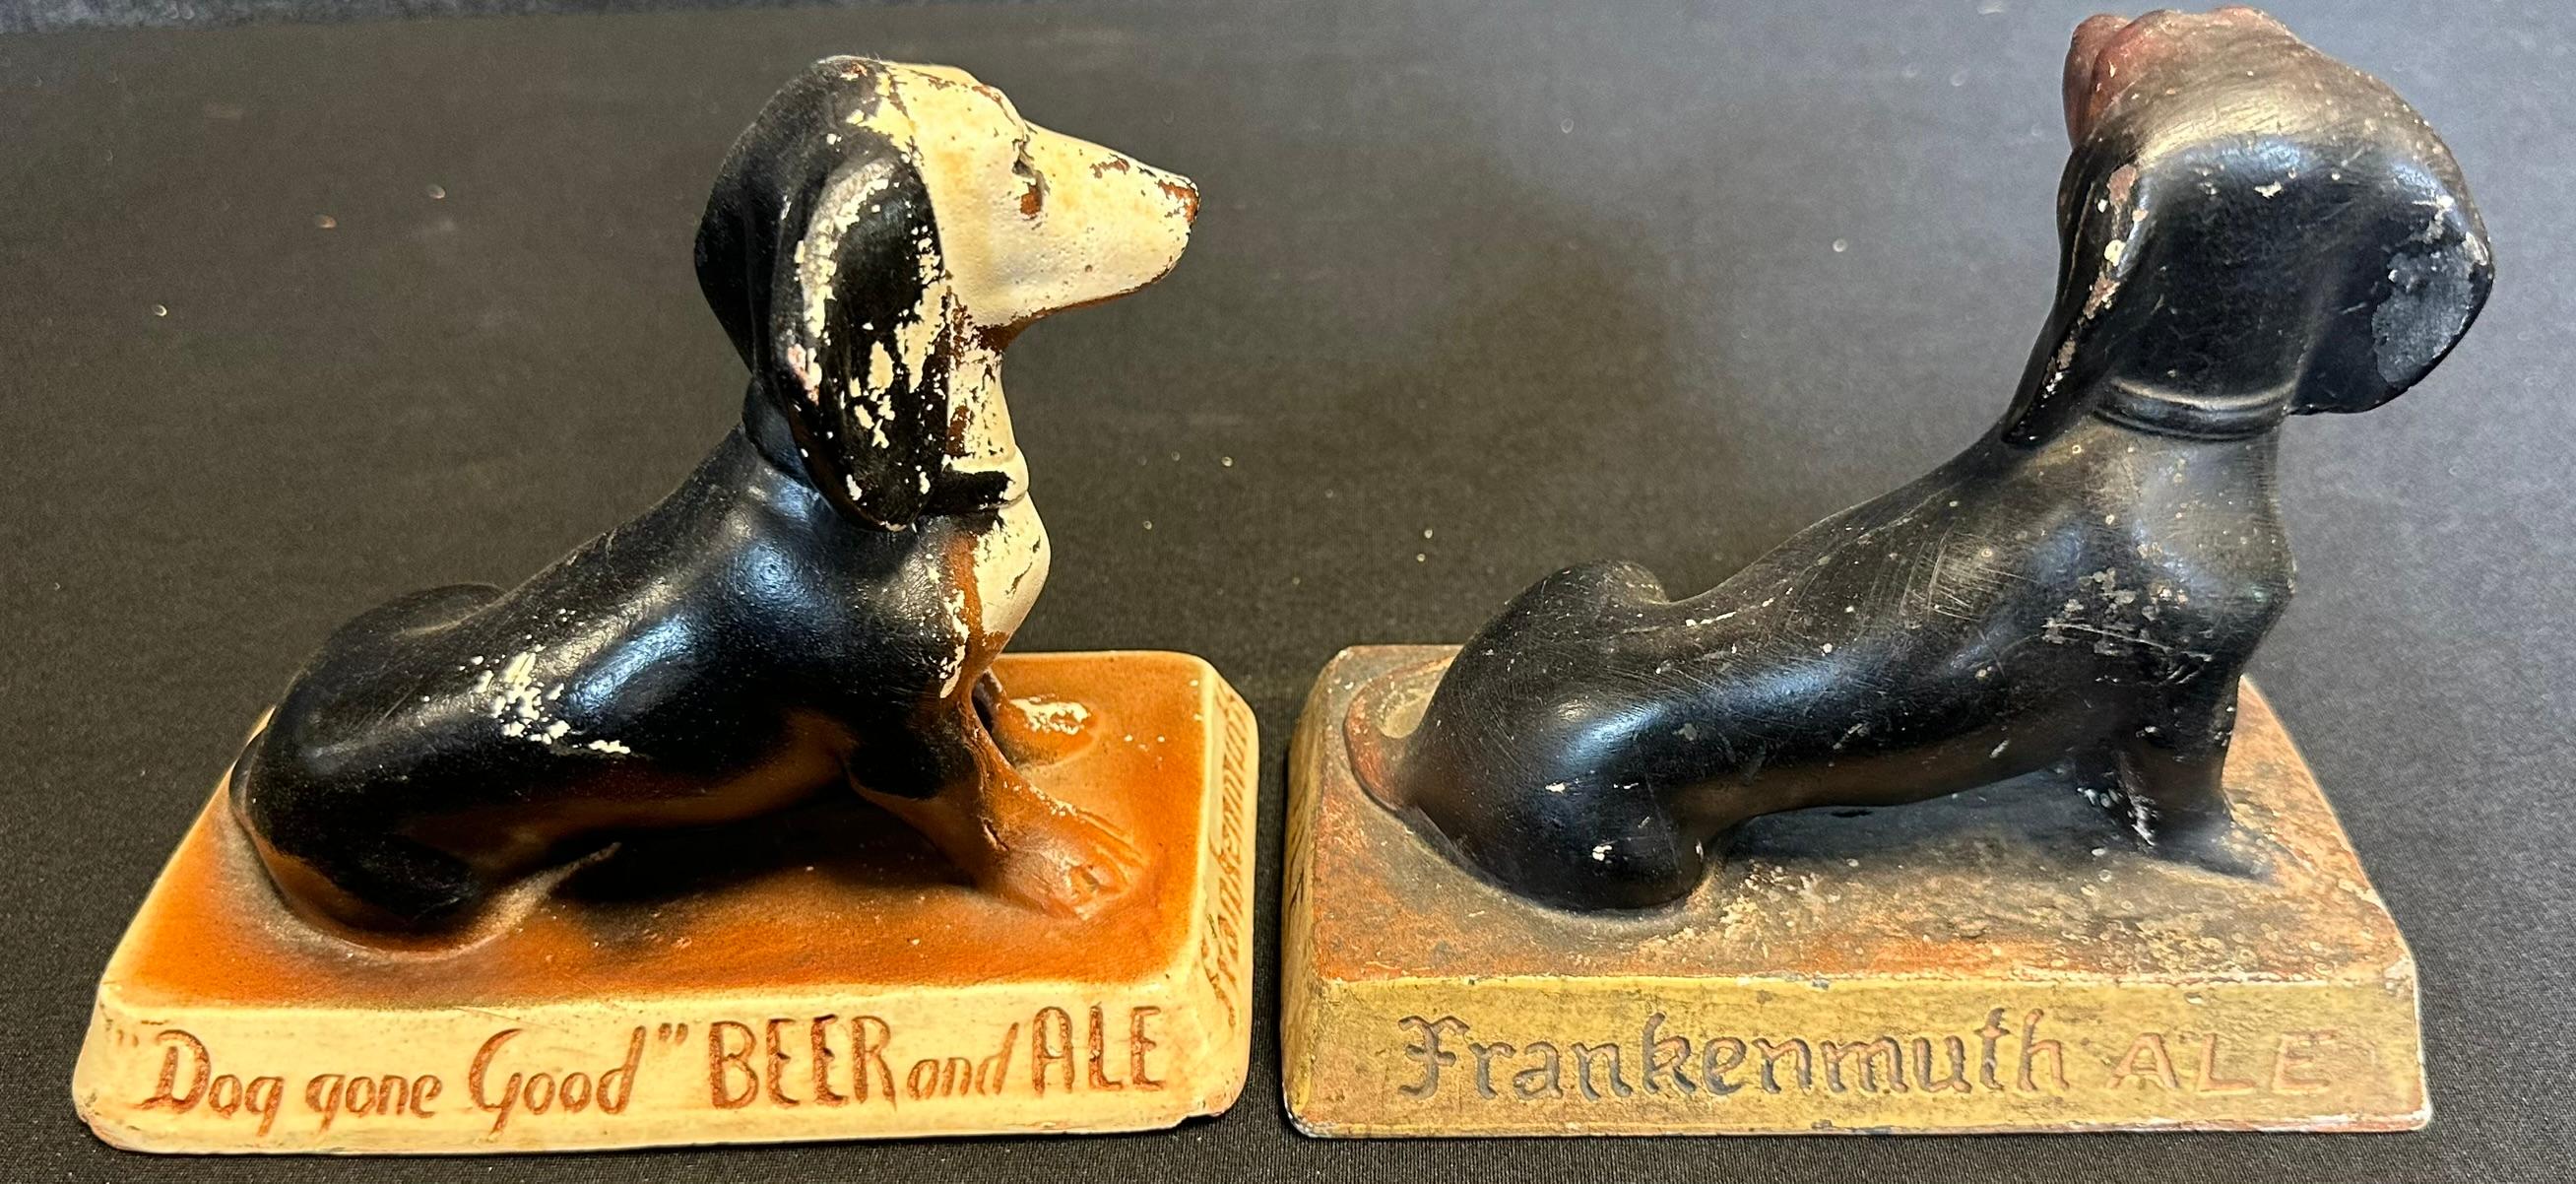 Pair 1950s Frankenmuth Chalkware Advertising Beer & Ale Daschund Dogs